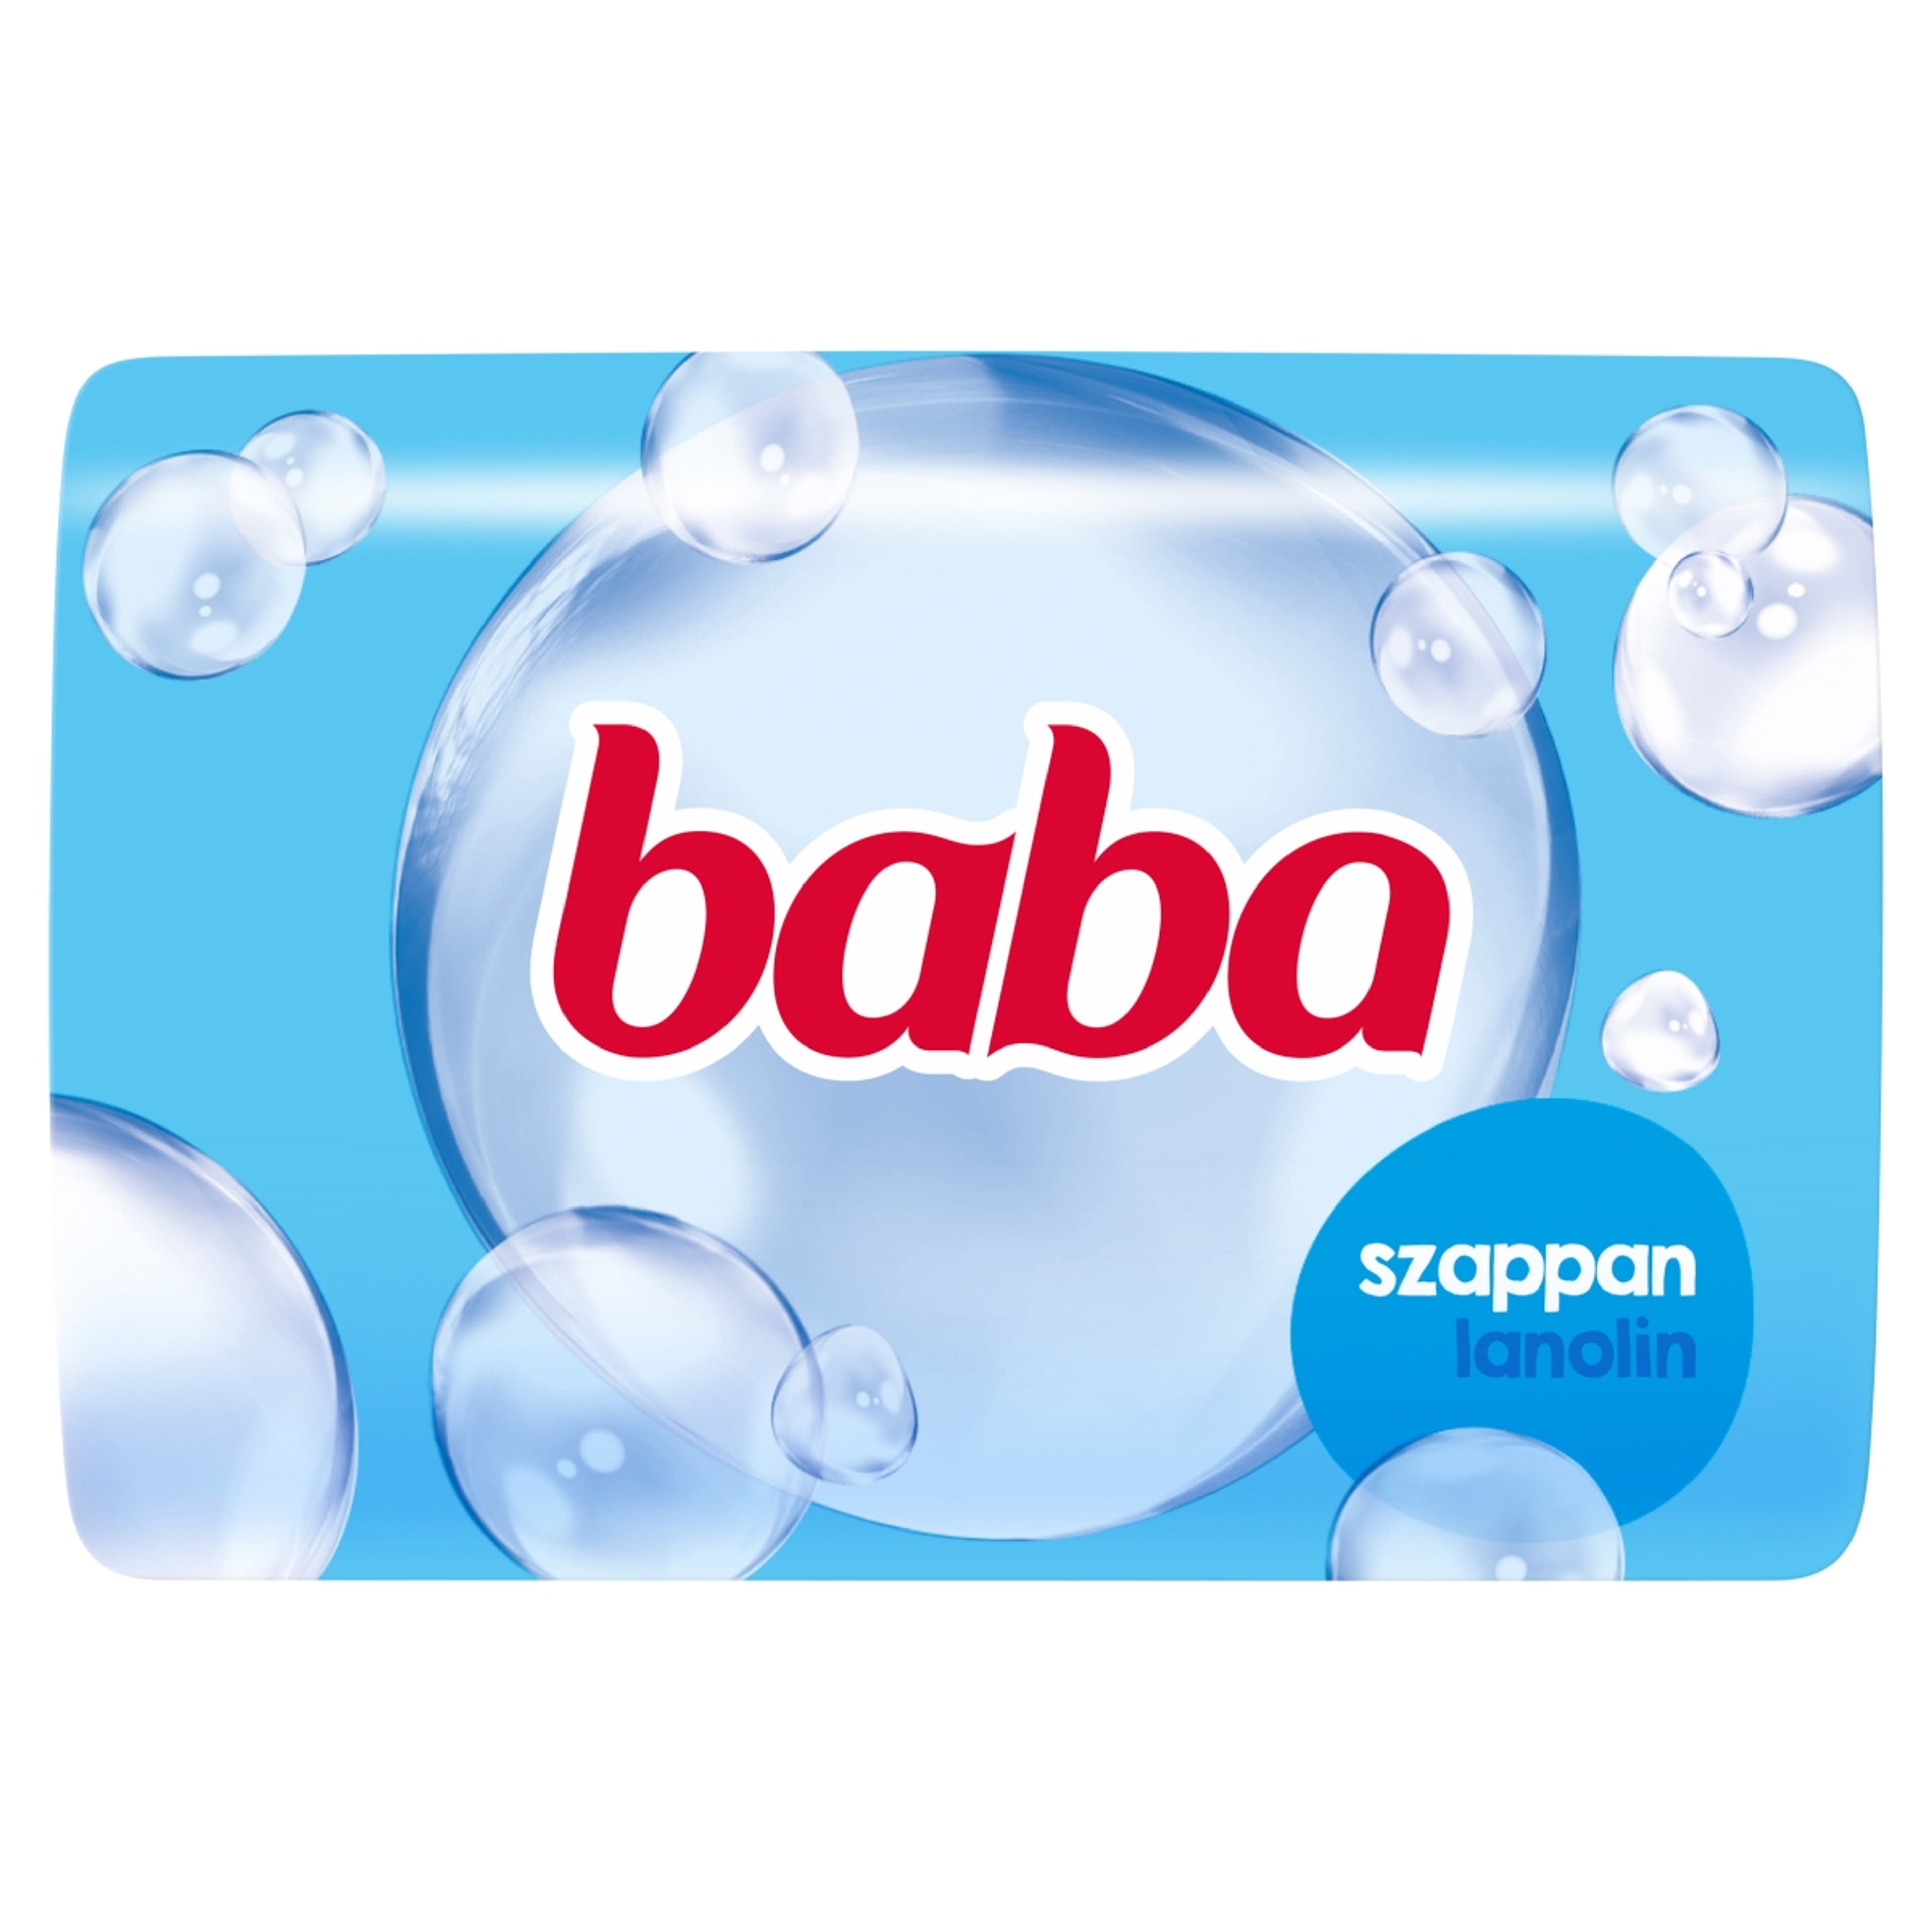 Baba lanolin szappan - 90 g-1